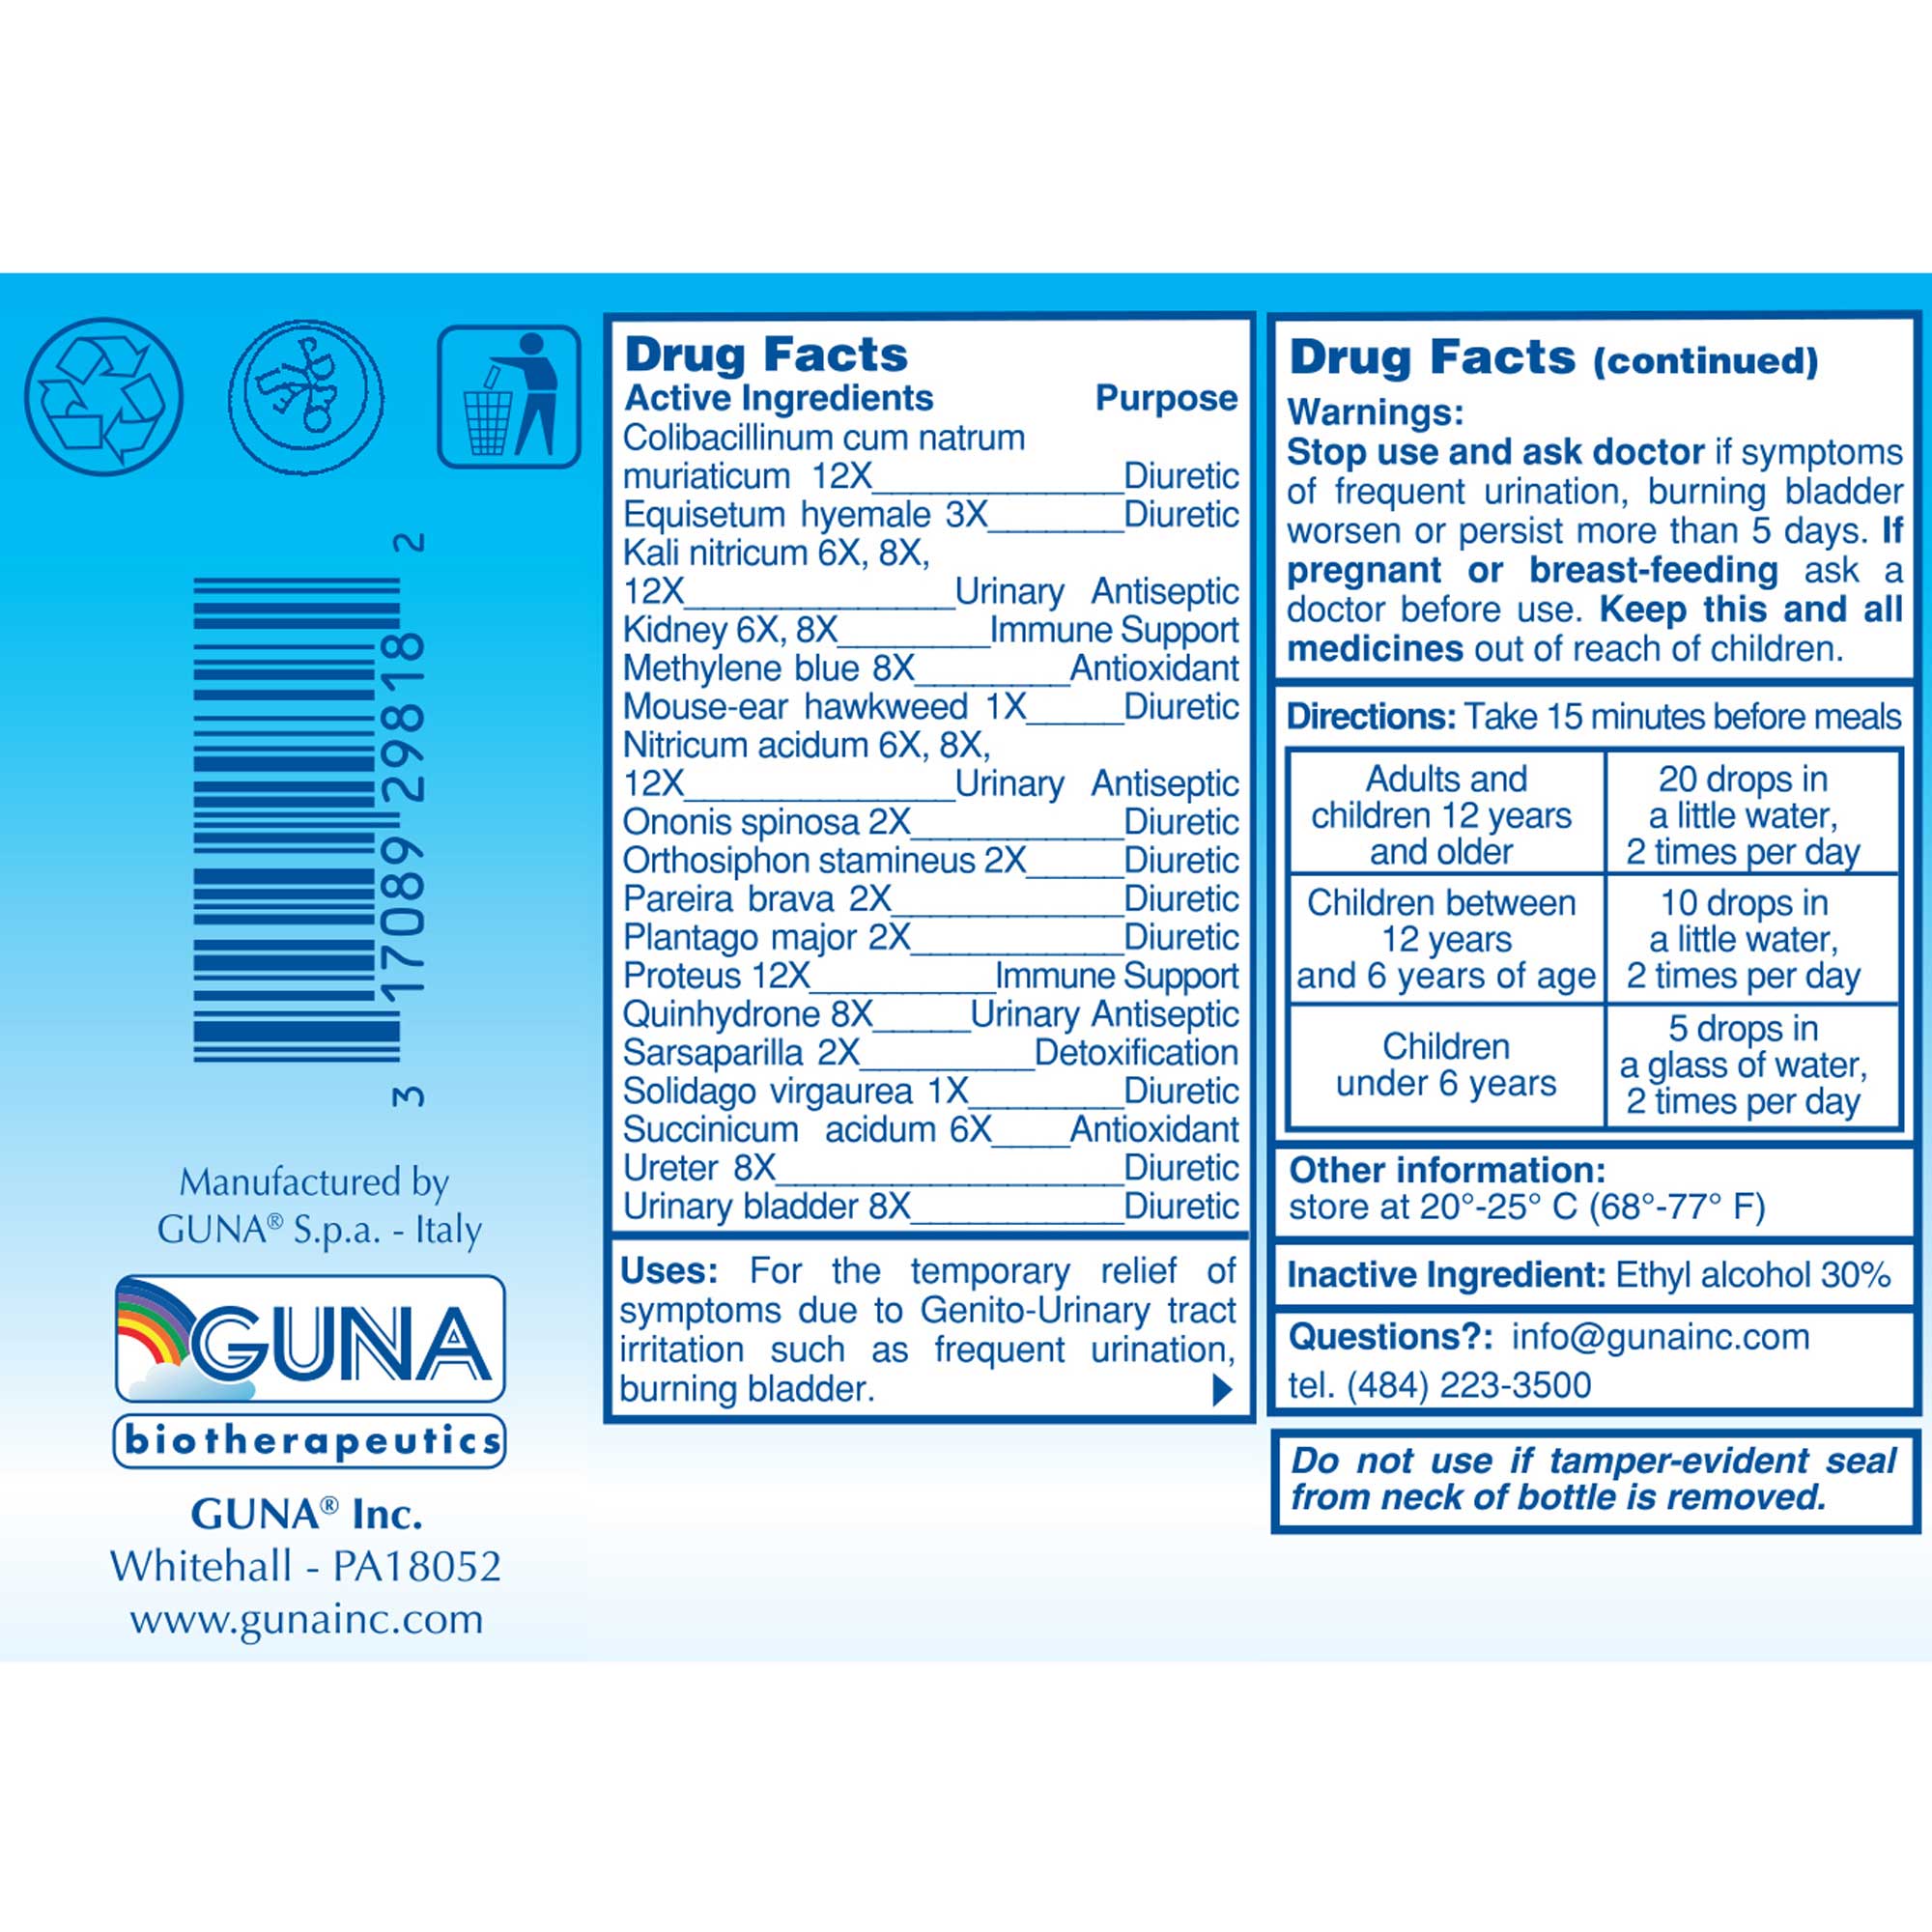 GUNA Biotherapeutics GUNA-Kidney Ingredients